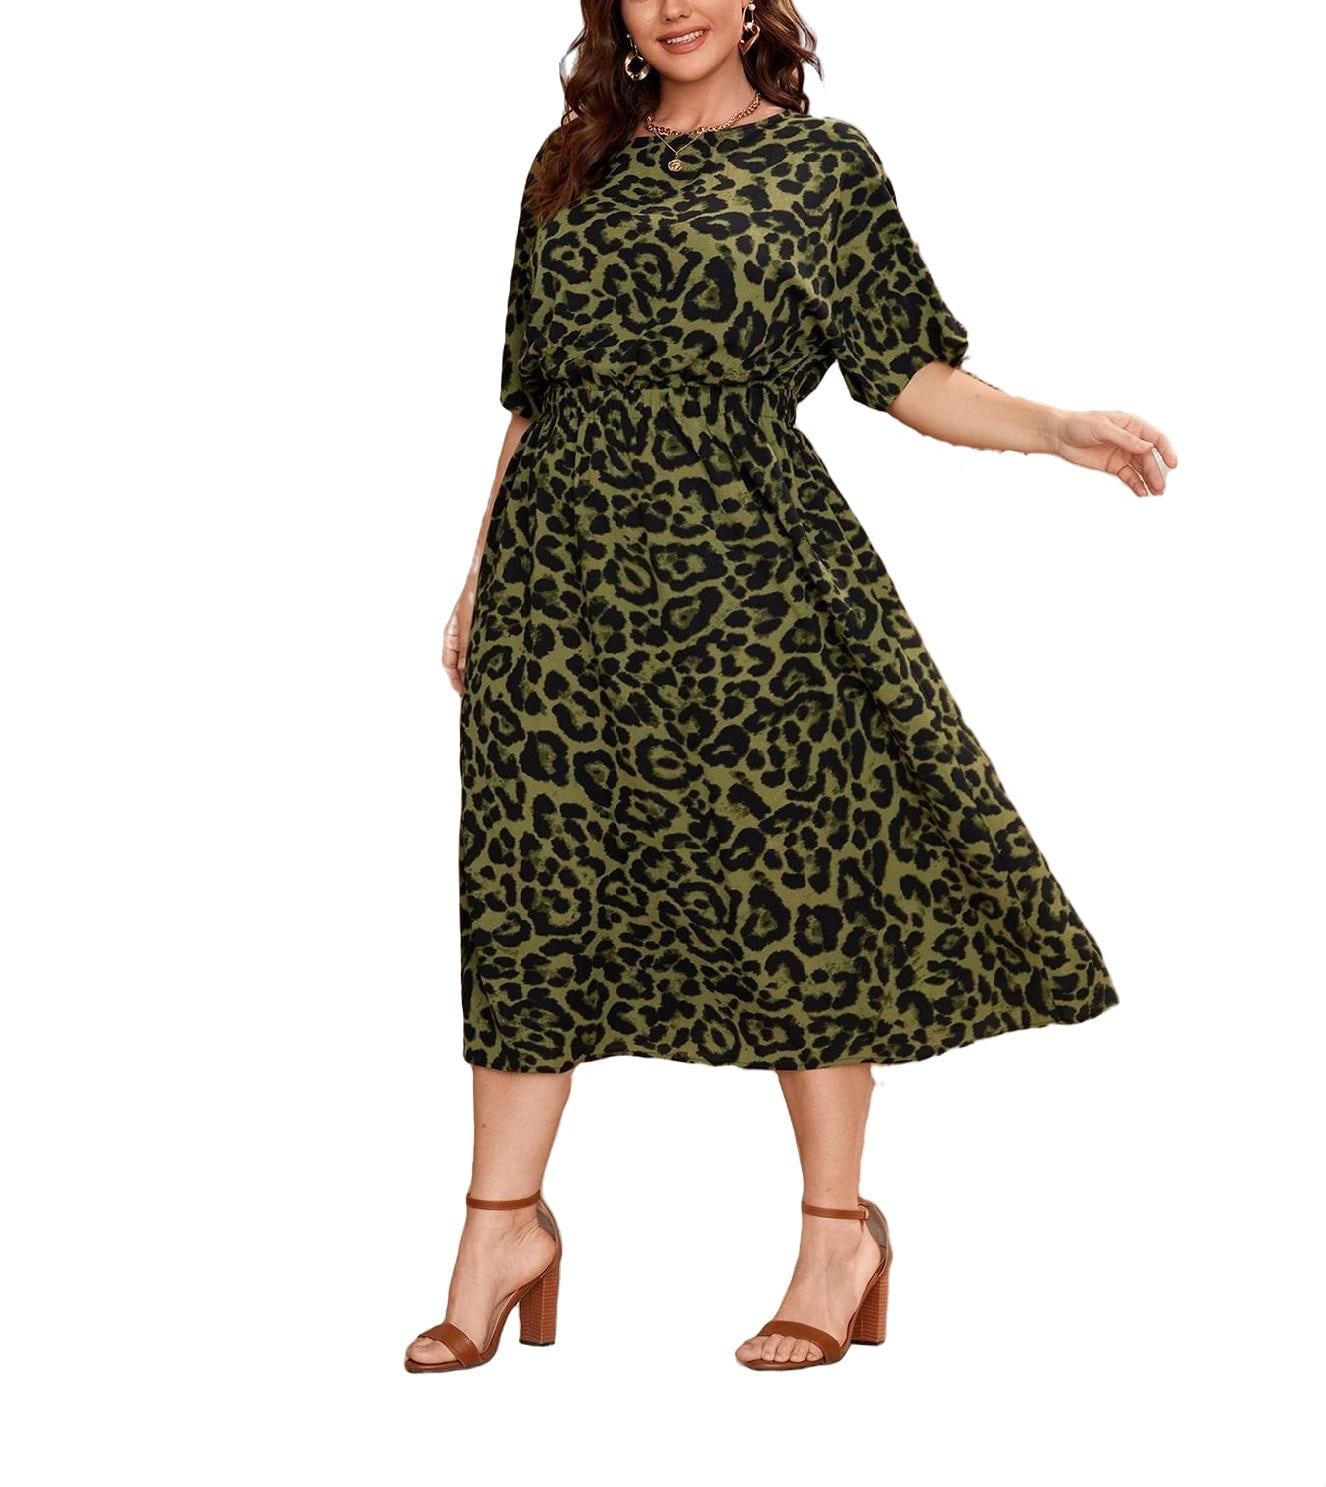 Leopard Print Round Neck A Line Short Sleeve Olive Green Plus Size (Women's) - Walmart.com